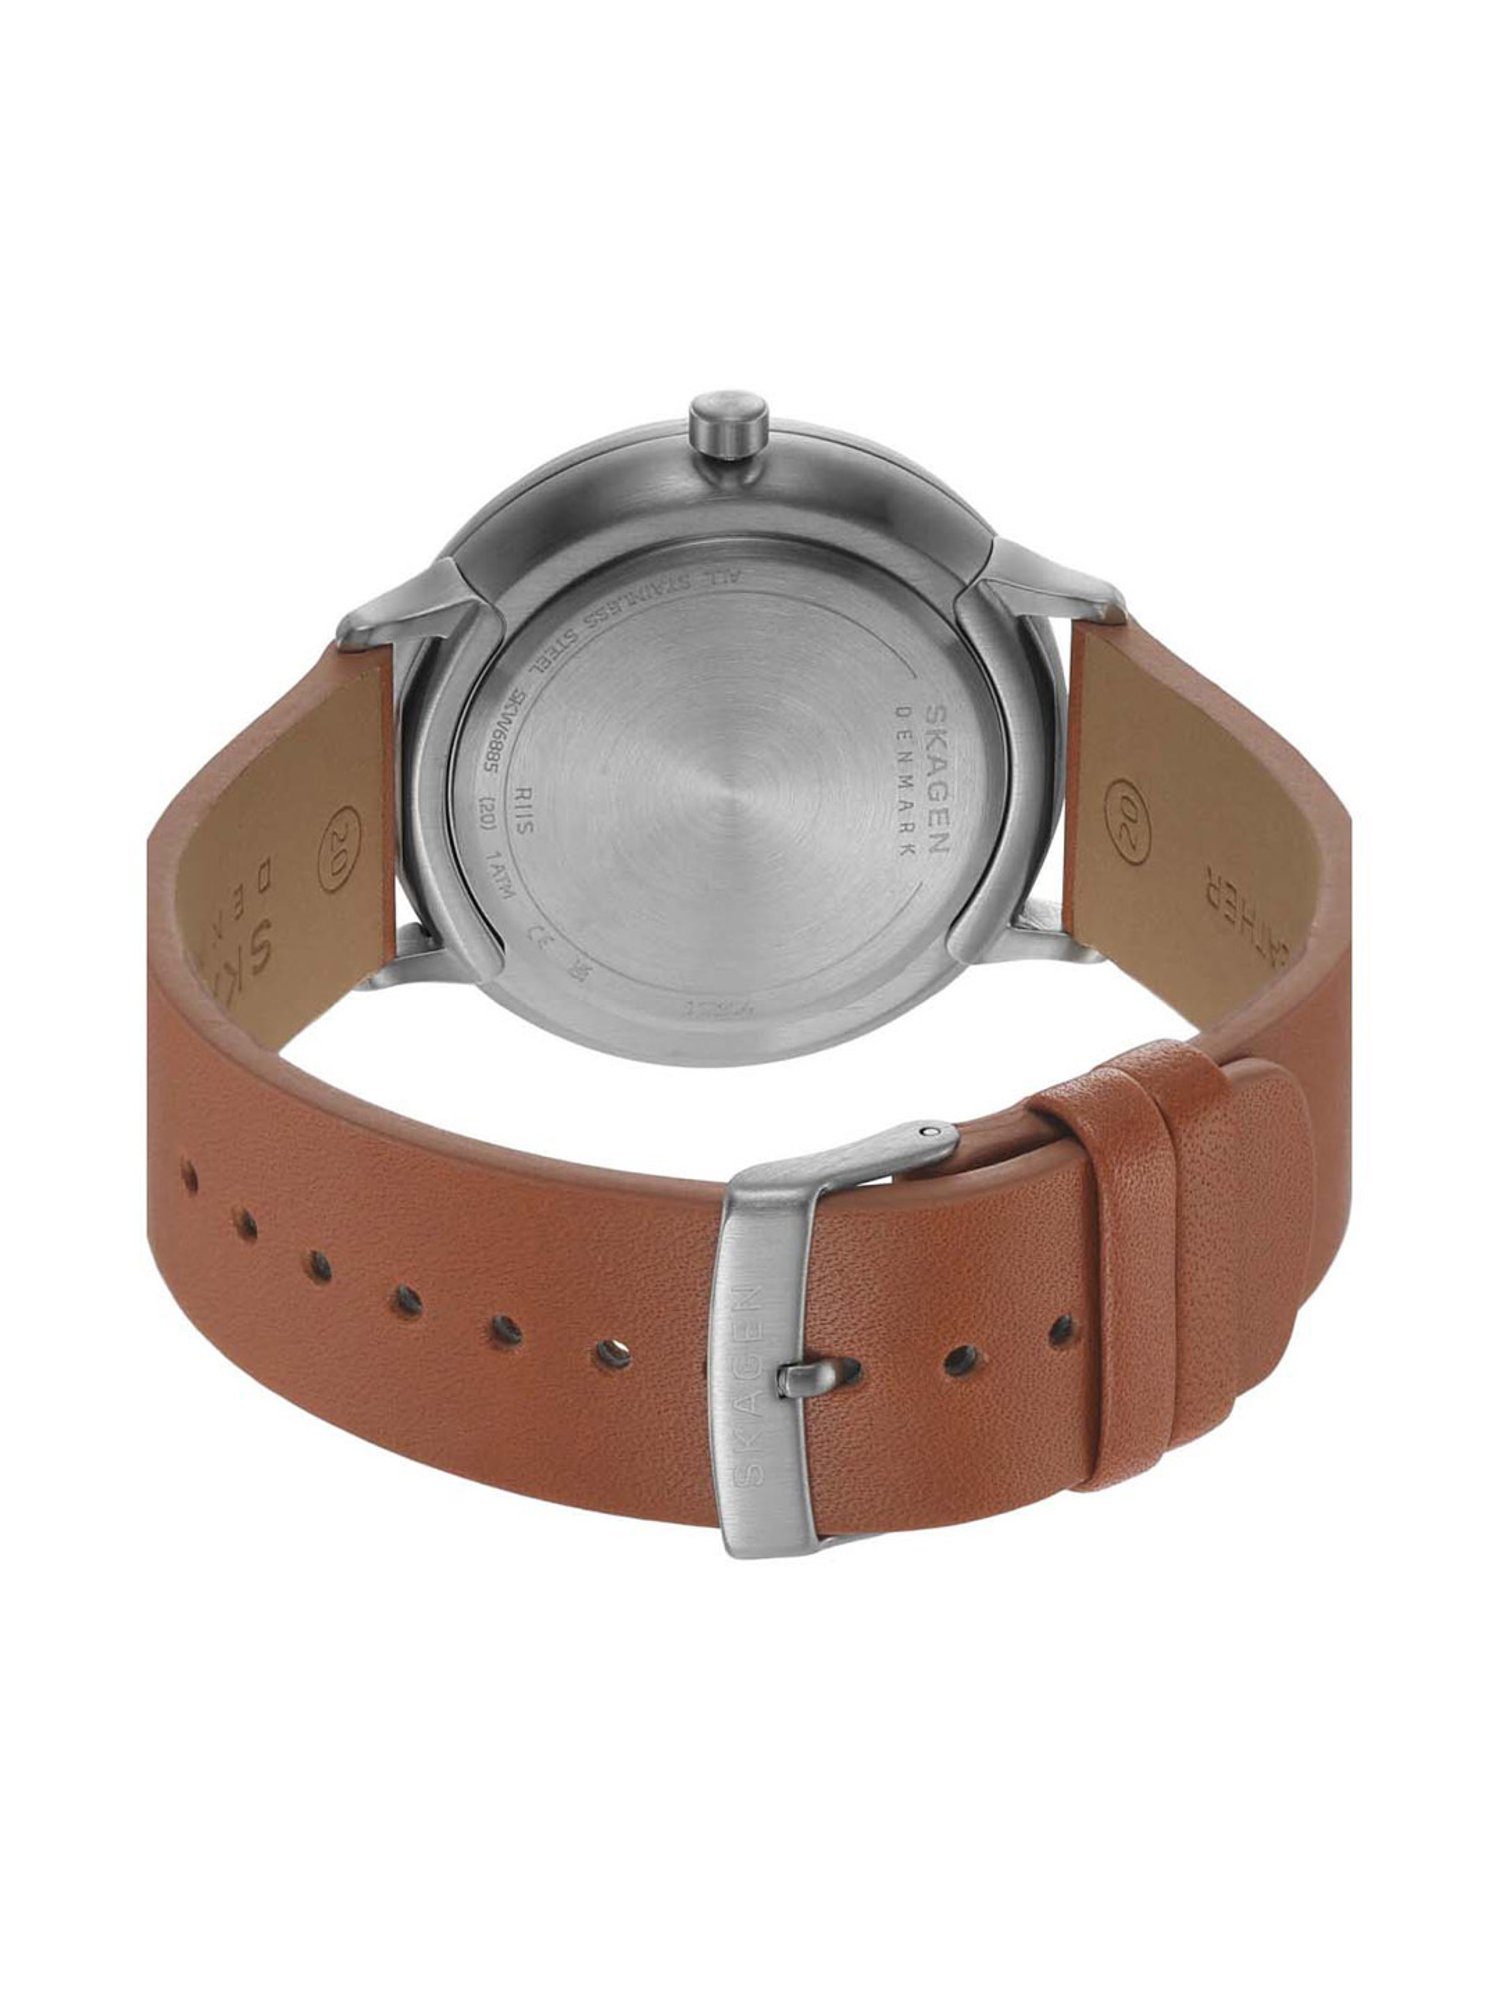 Buy Skagen Riis SKW6885 Analog Watch for Men at Best Price @ Tata CLiQ